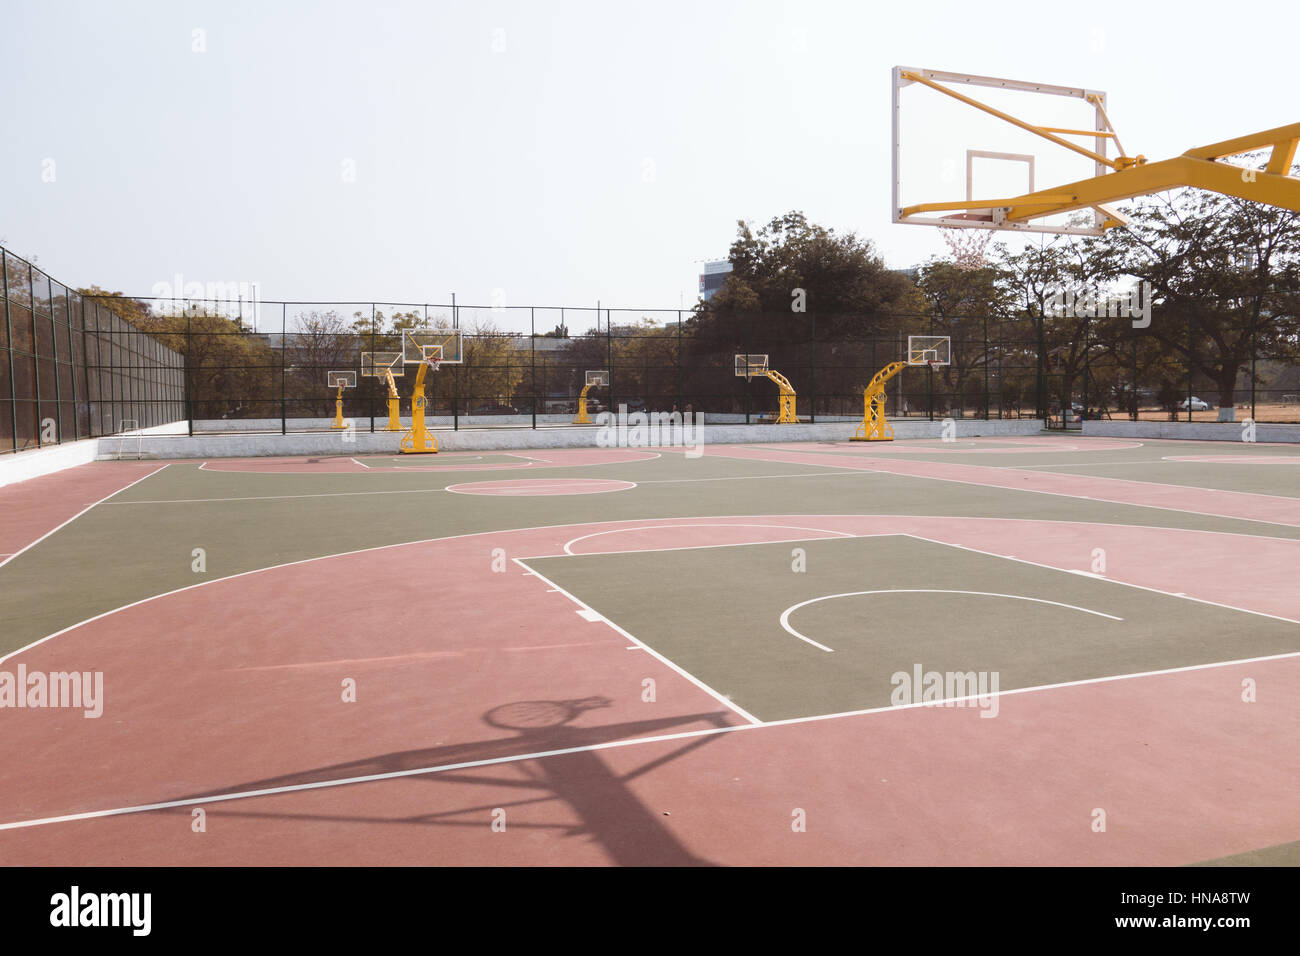 Basketballplatz in Indien Stockfoto